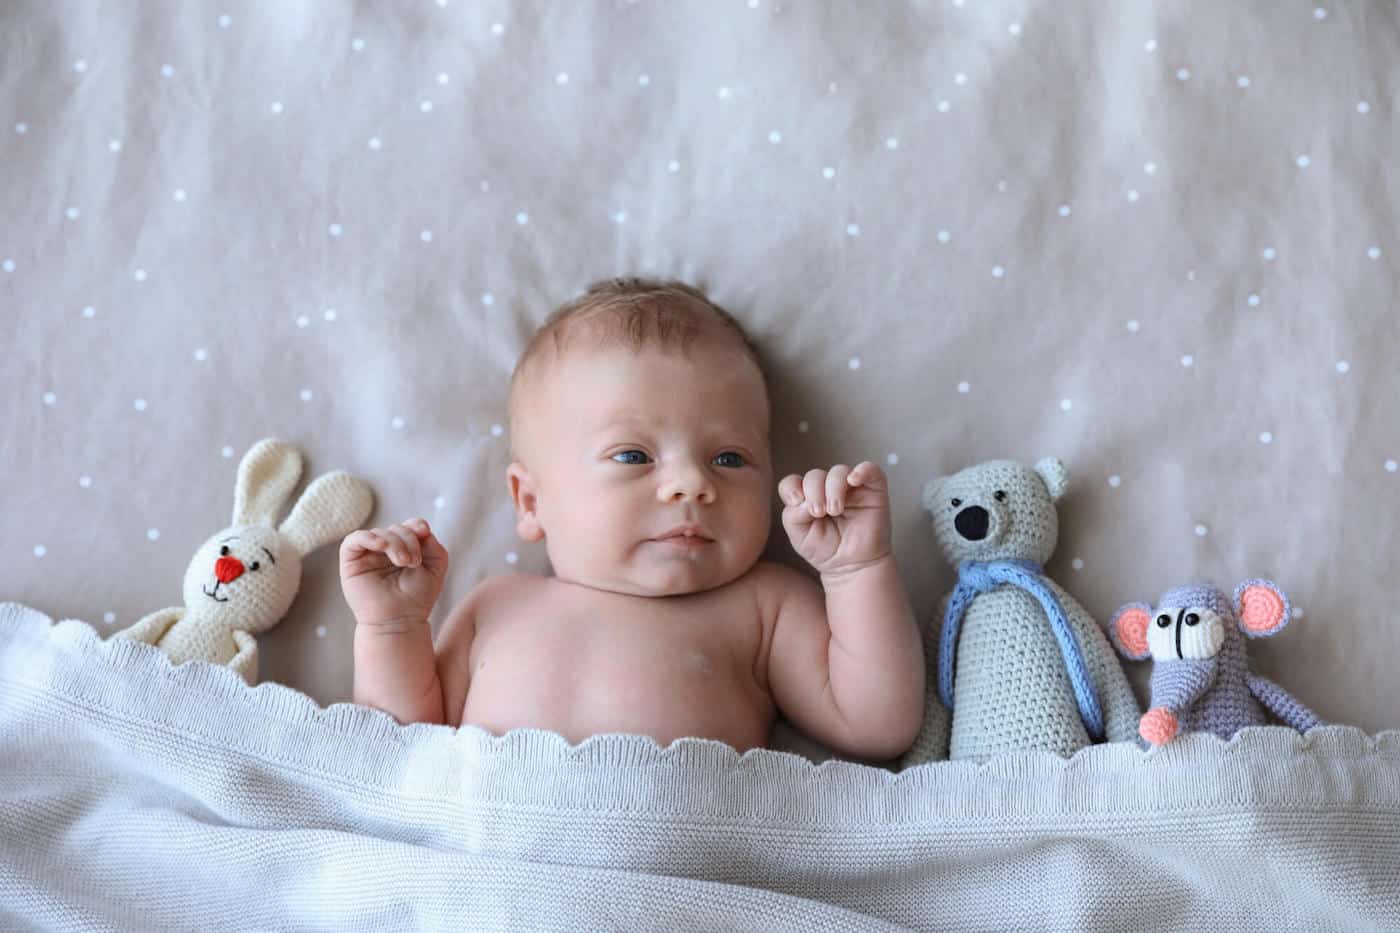 newborn boy under covers stuffed animals